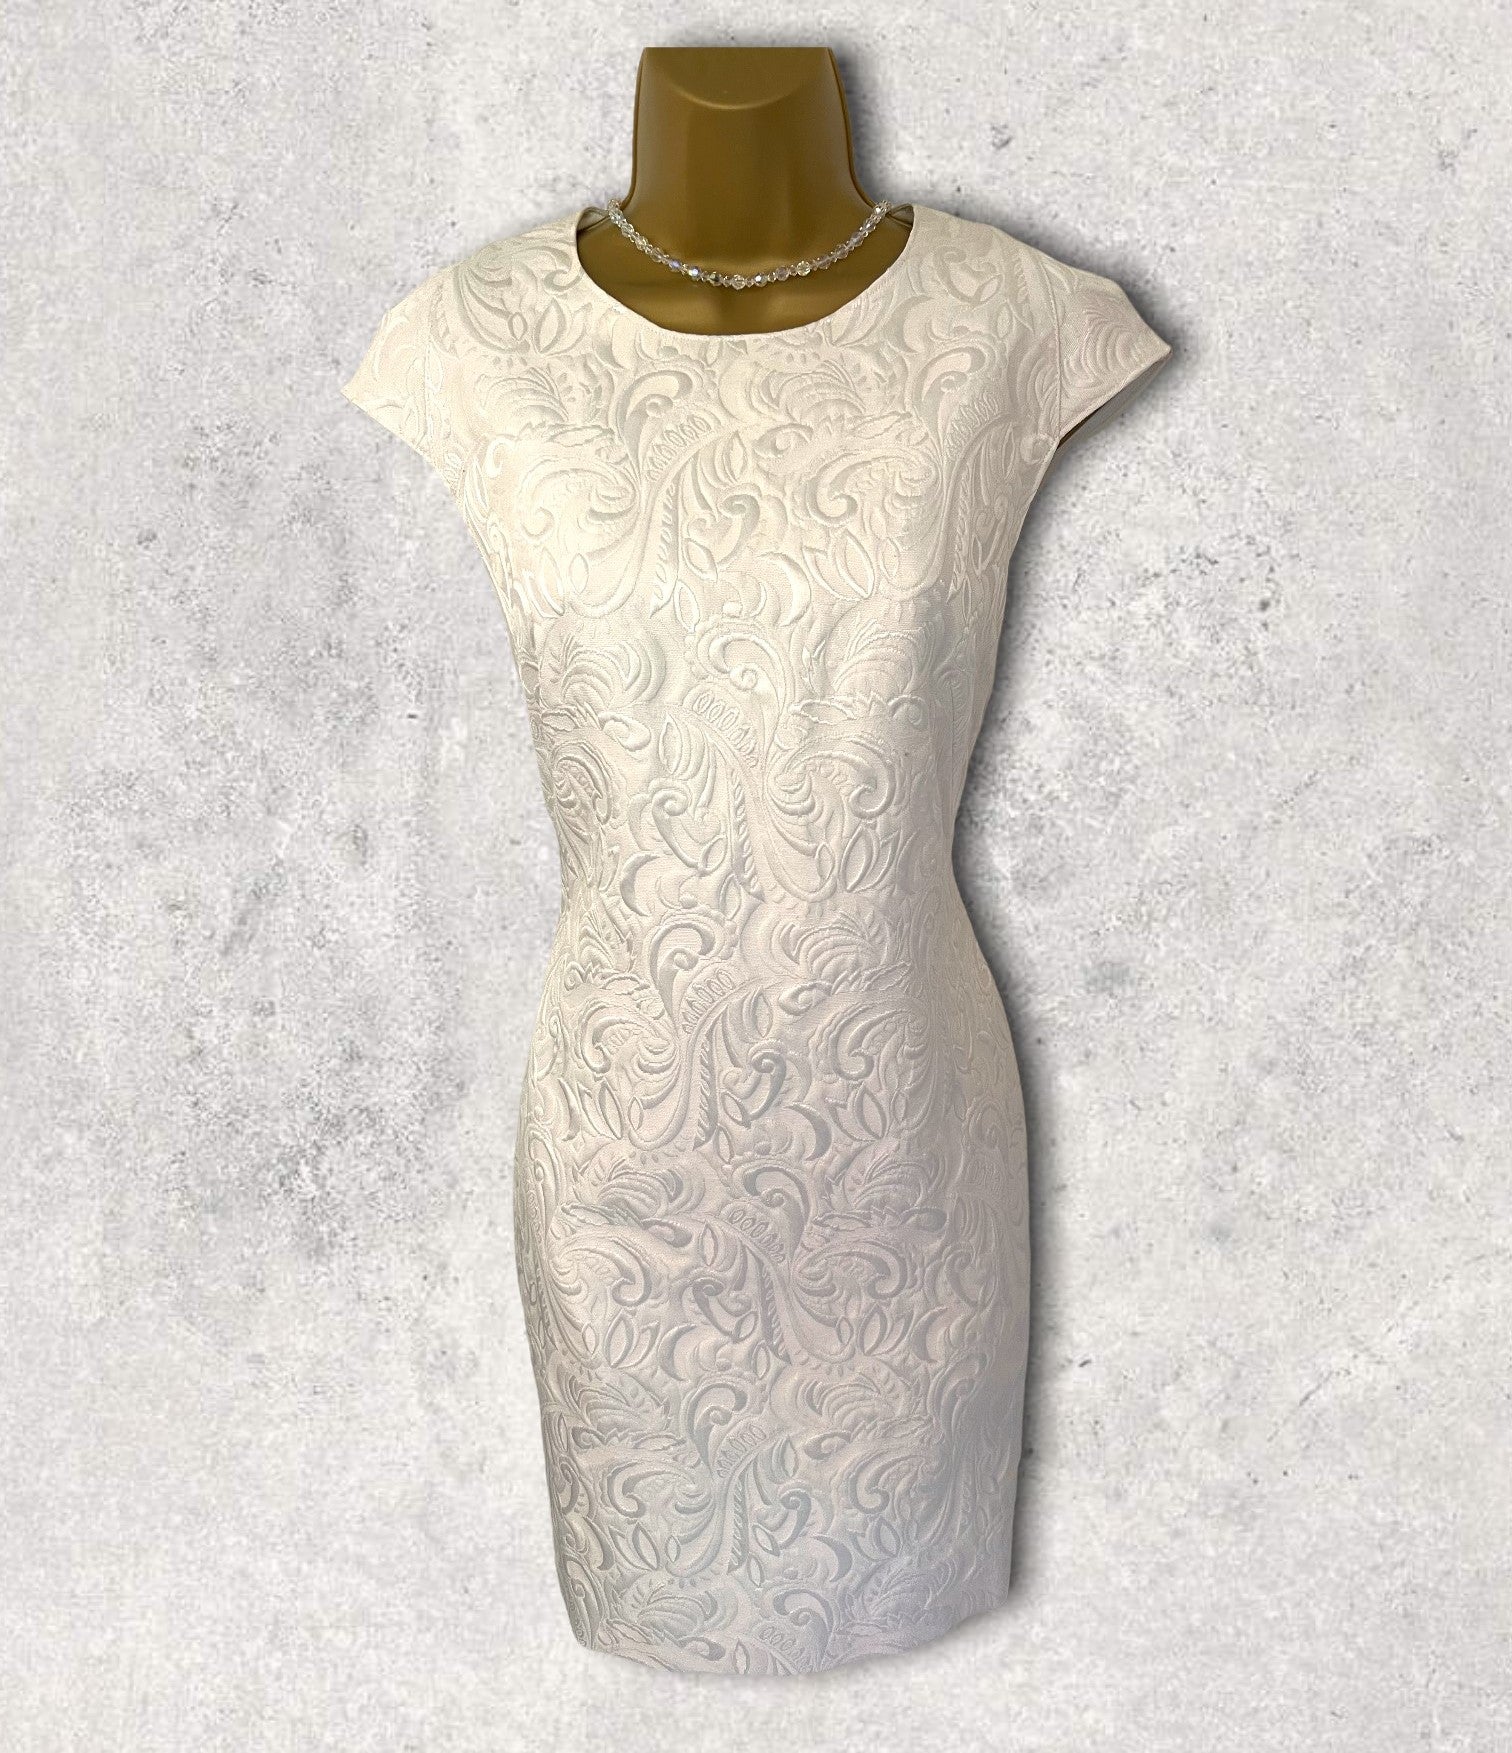 TED BAKER Cream Bezzey Jacquard Cotton Blend Shift Dress UK 8 US 4 EU 36 RRP £169 Timeless Fashions